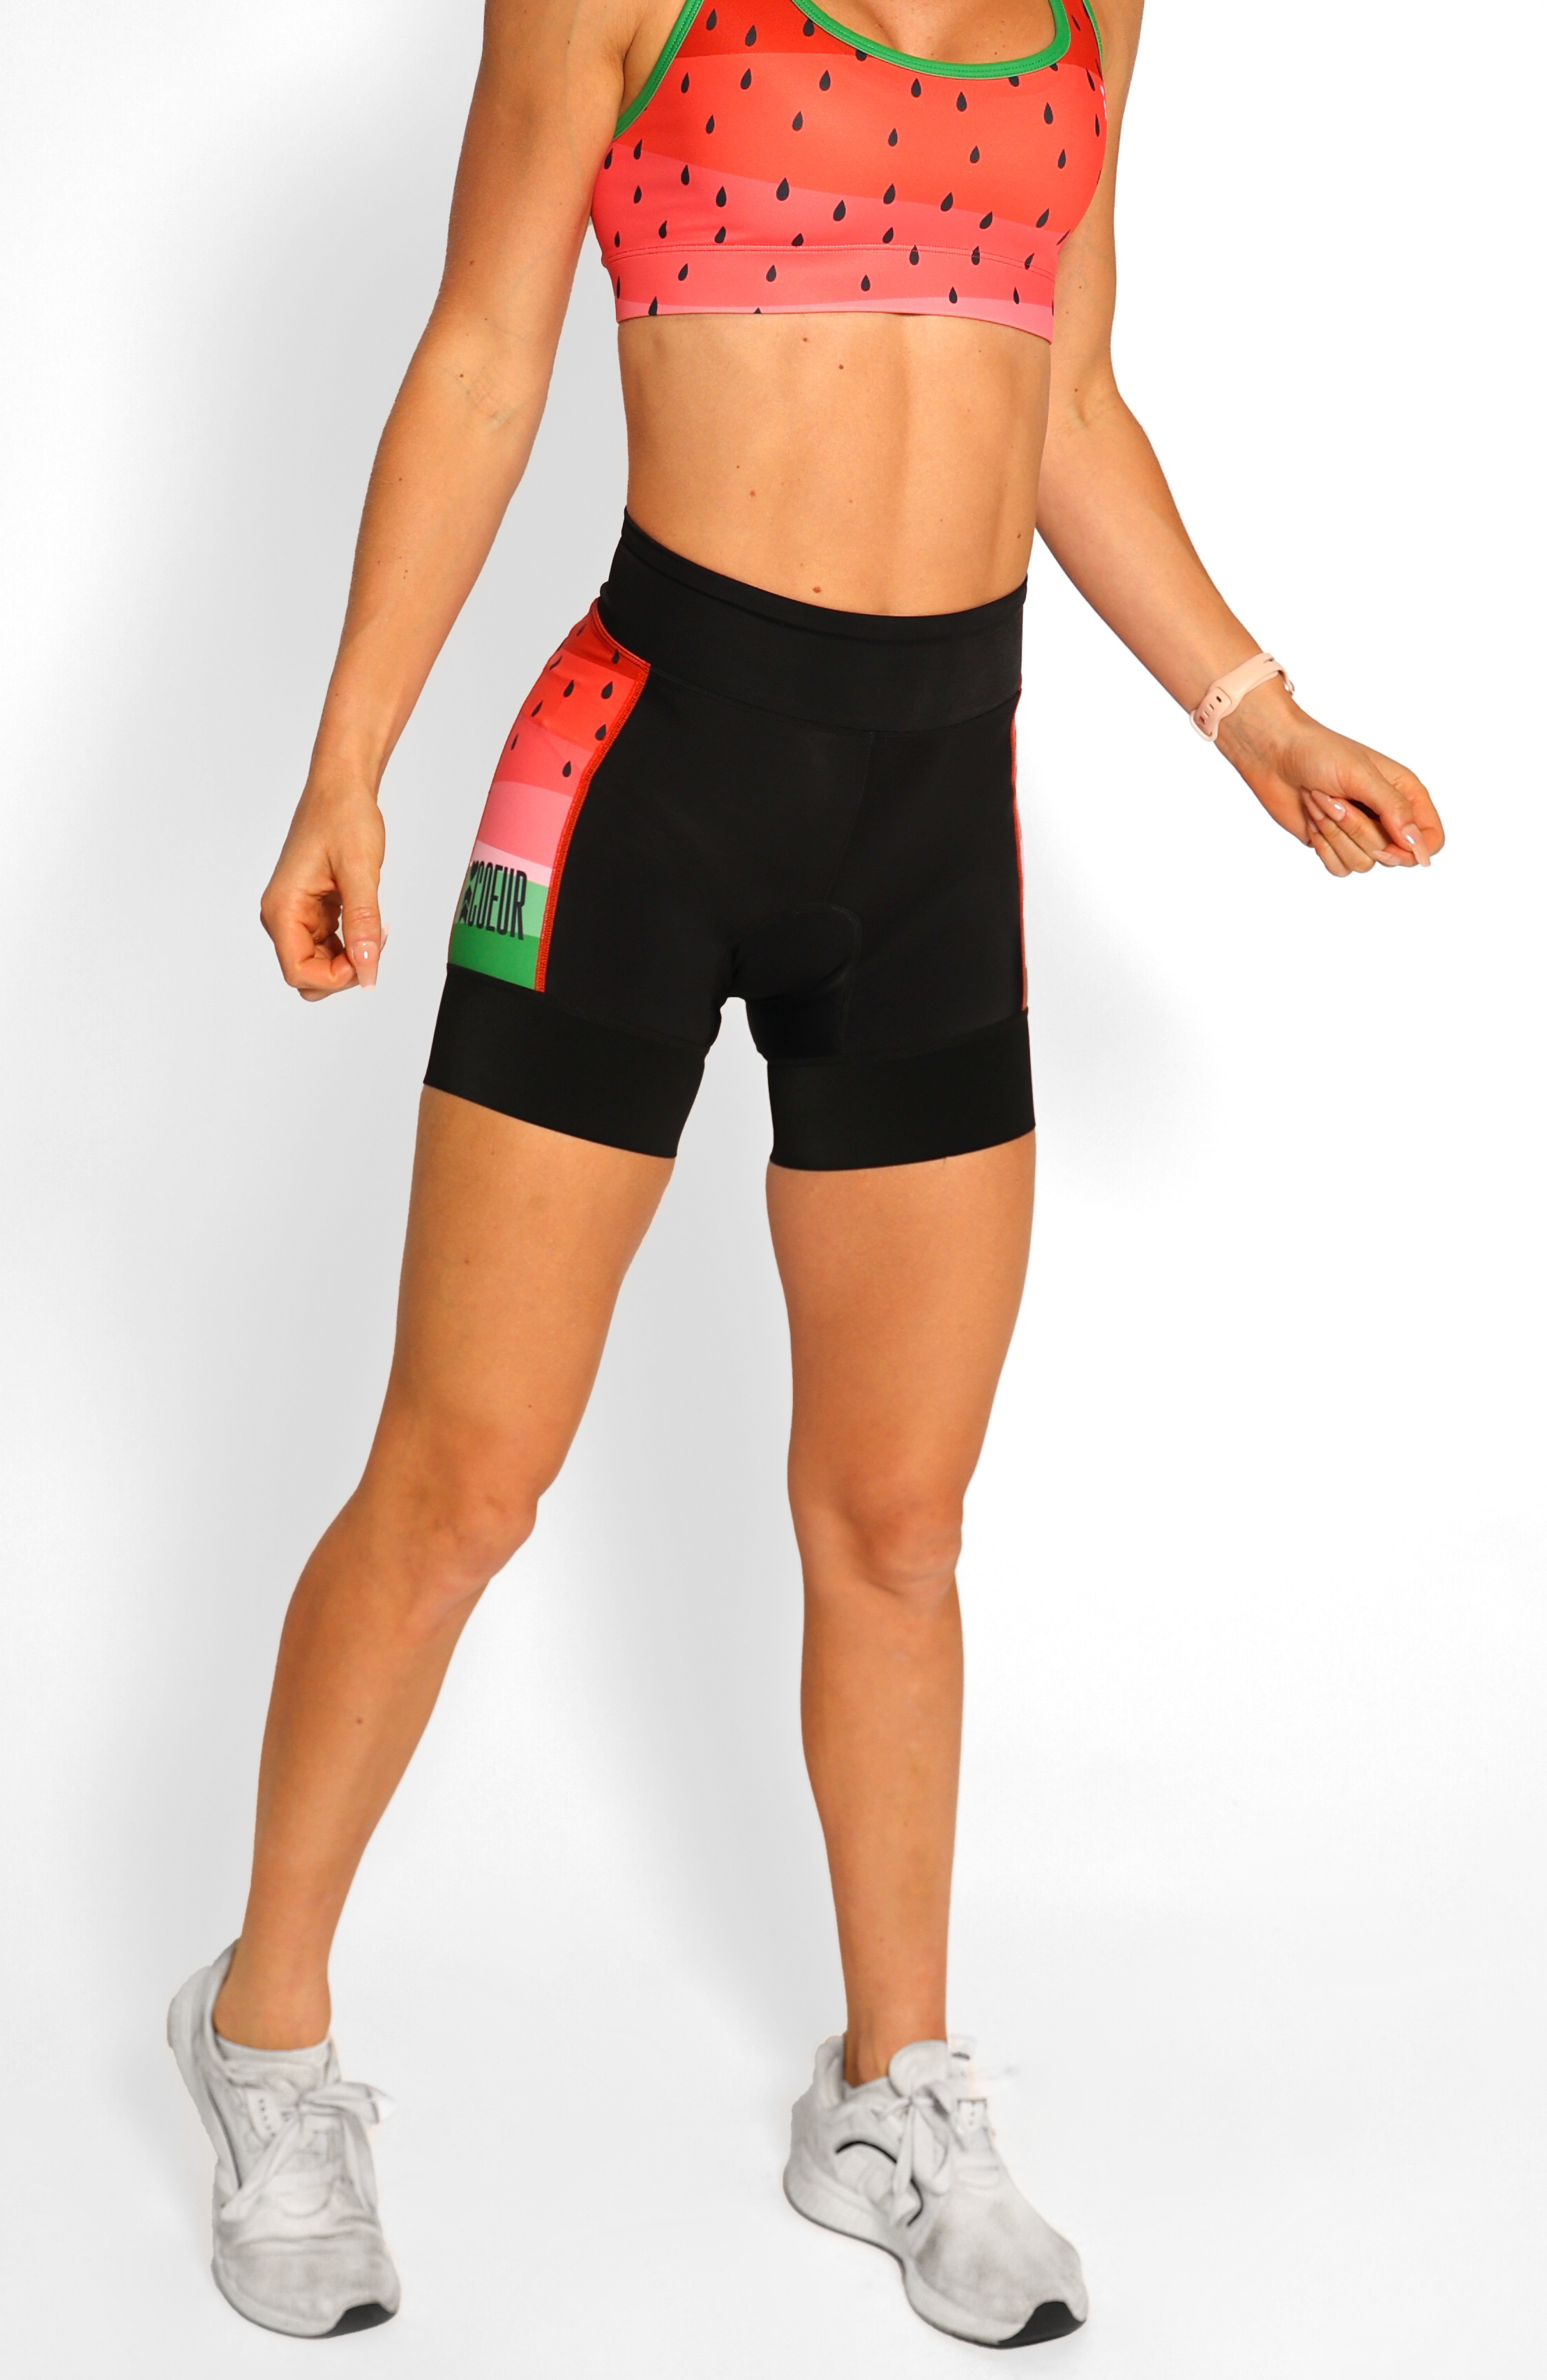 Coeur Sports 5 inch Powerband Tri Short Watermelon Women's 5" Triathlon Shorts